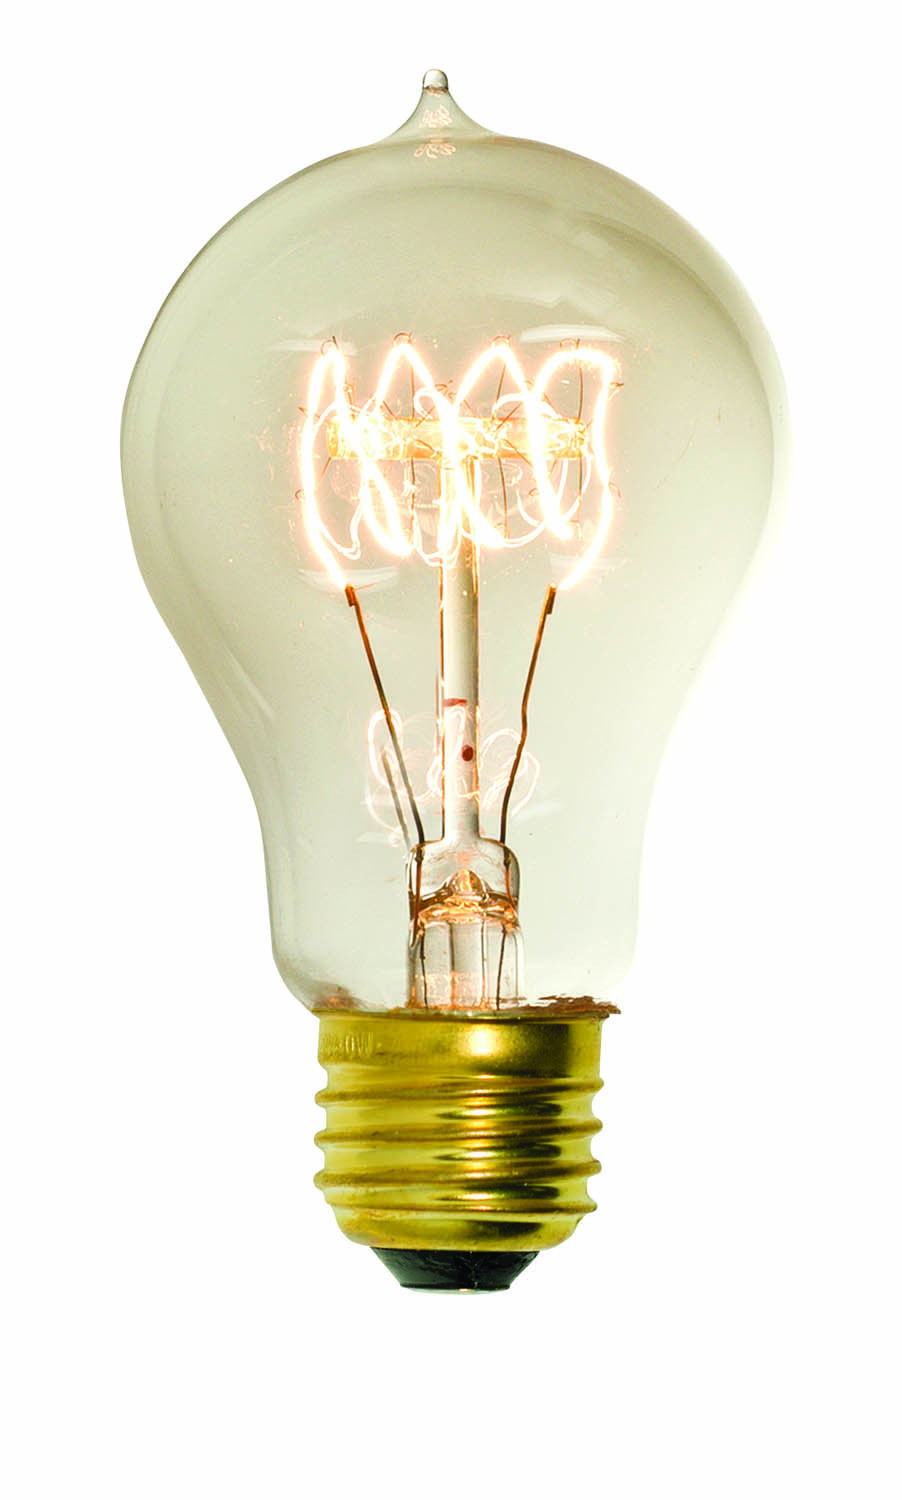 Early Electric Bulbs